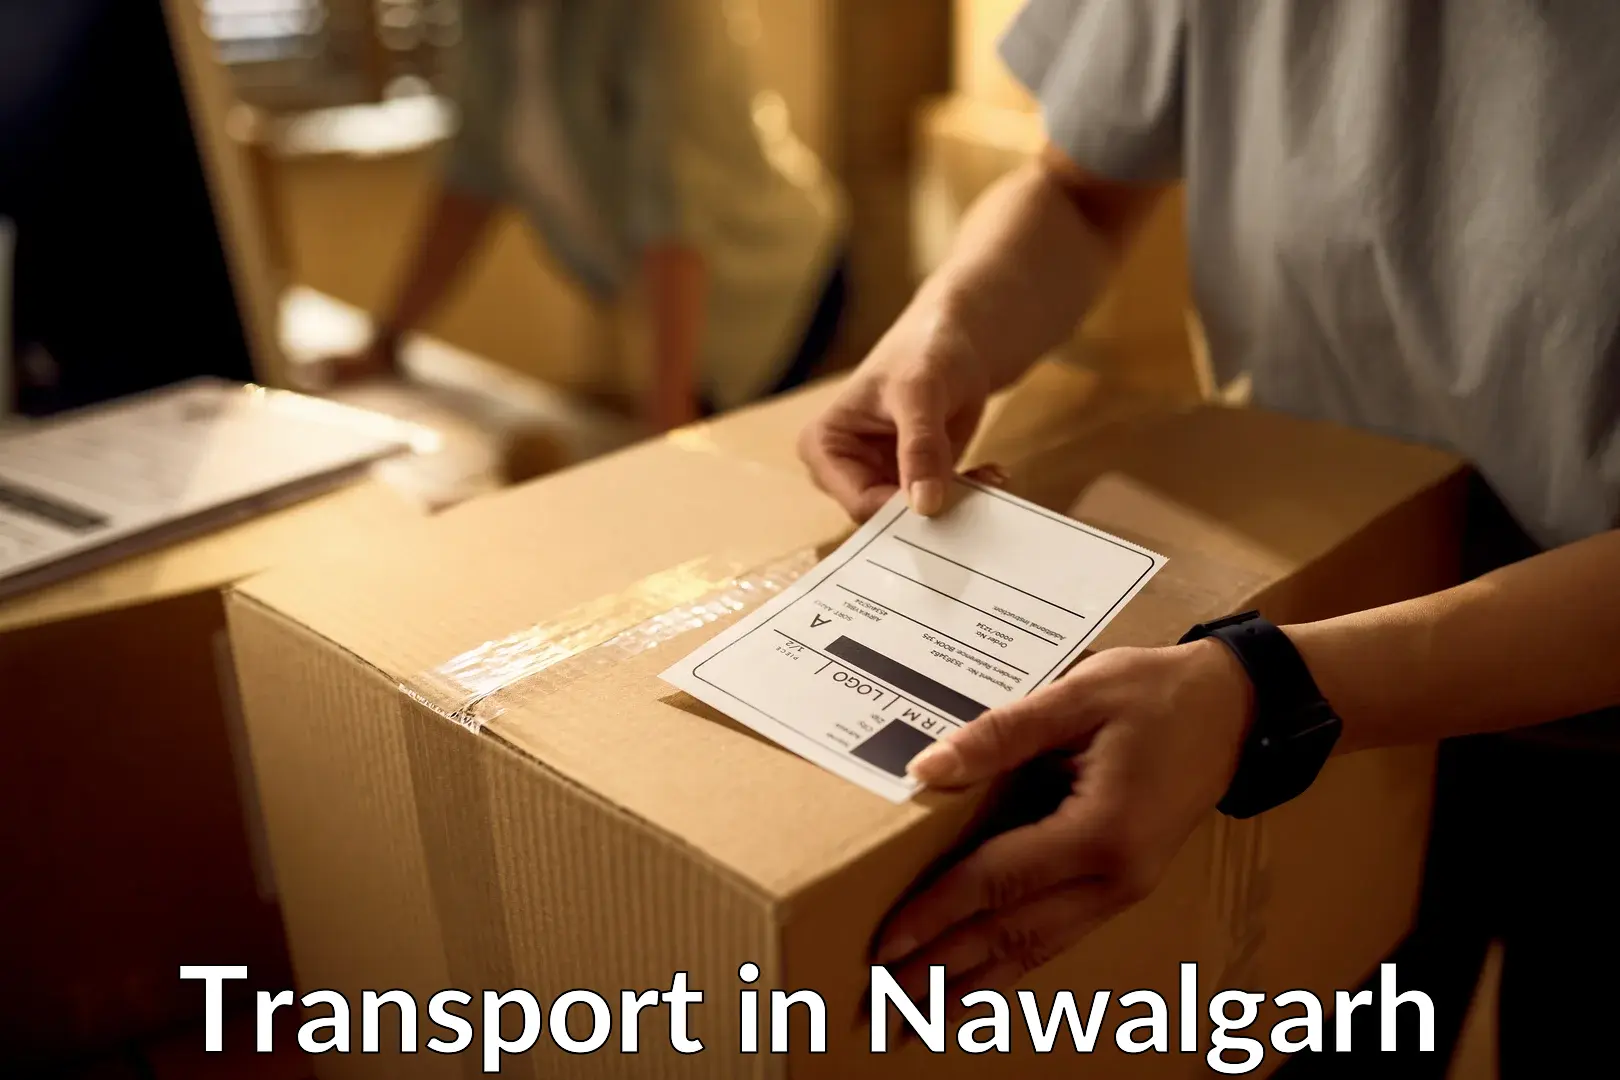 Interstate goods transport in Nawalgarh